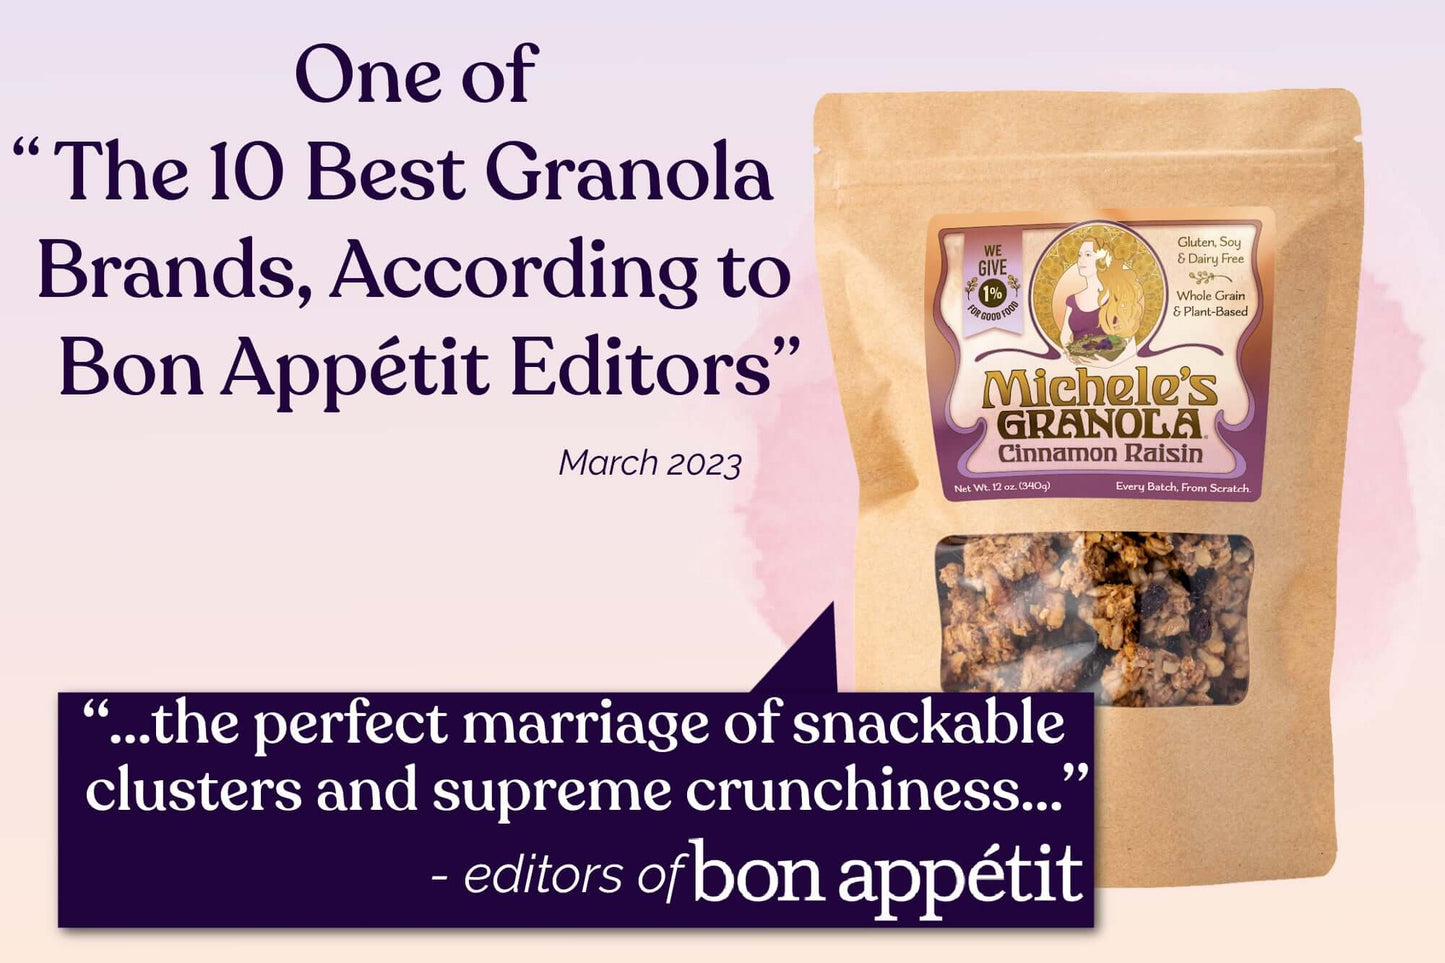 One of The 10 Best Granola Brands, According to Bon Appetit Editors, March 2023. Michele's Cinnamon Raisin Granola, vegan, gluten-free, women-owned